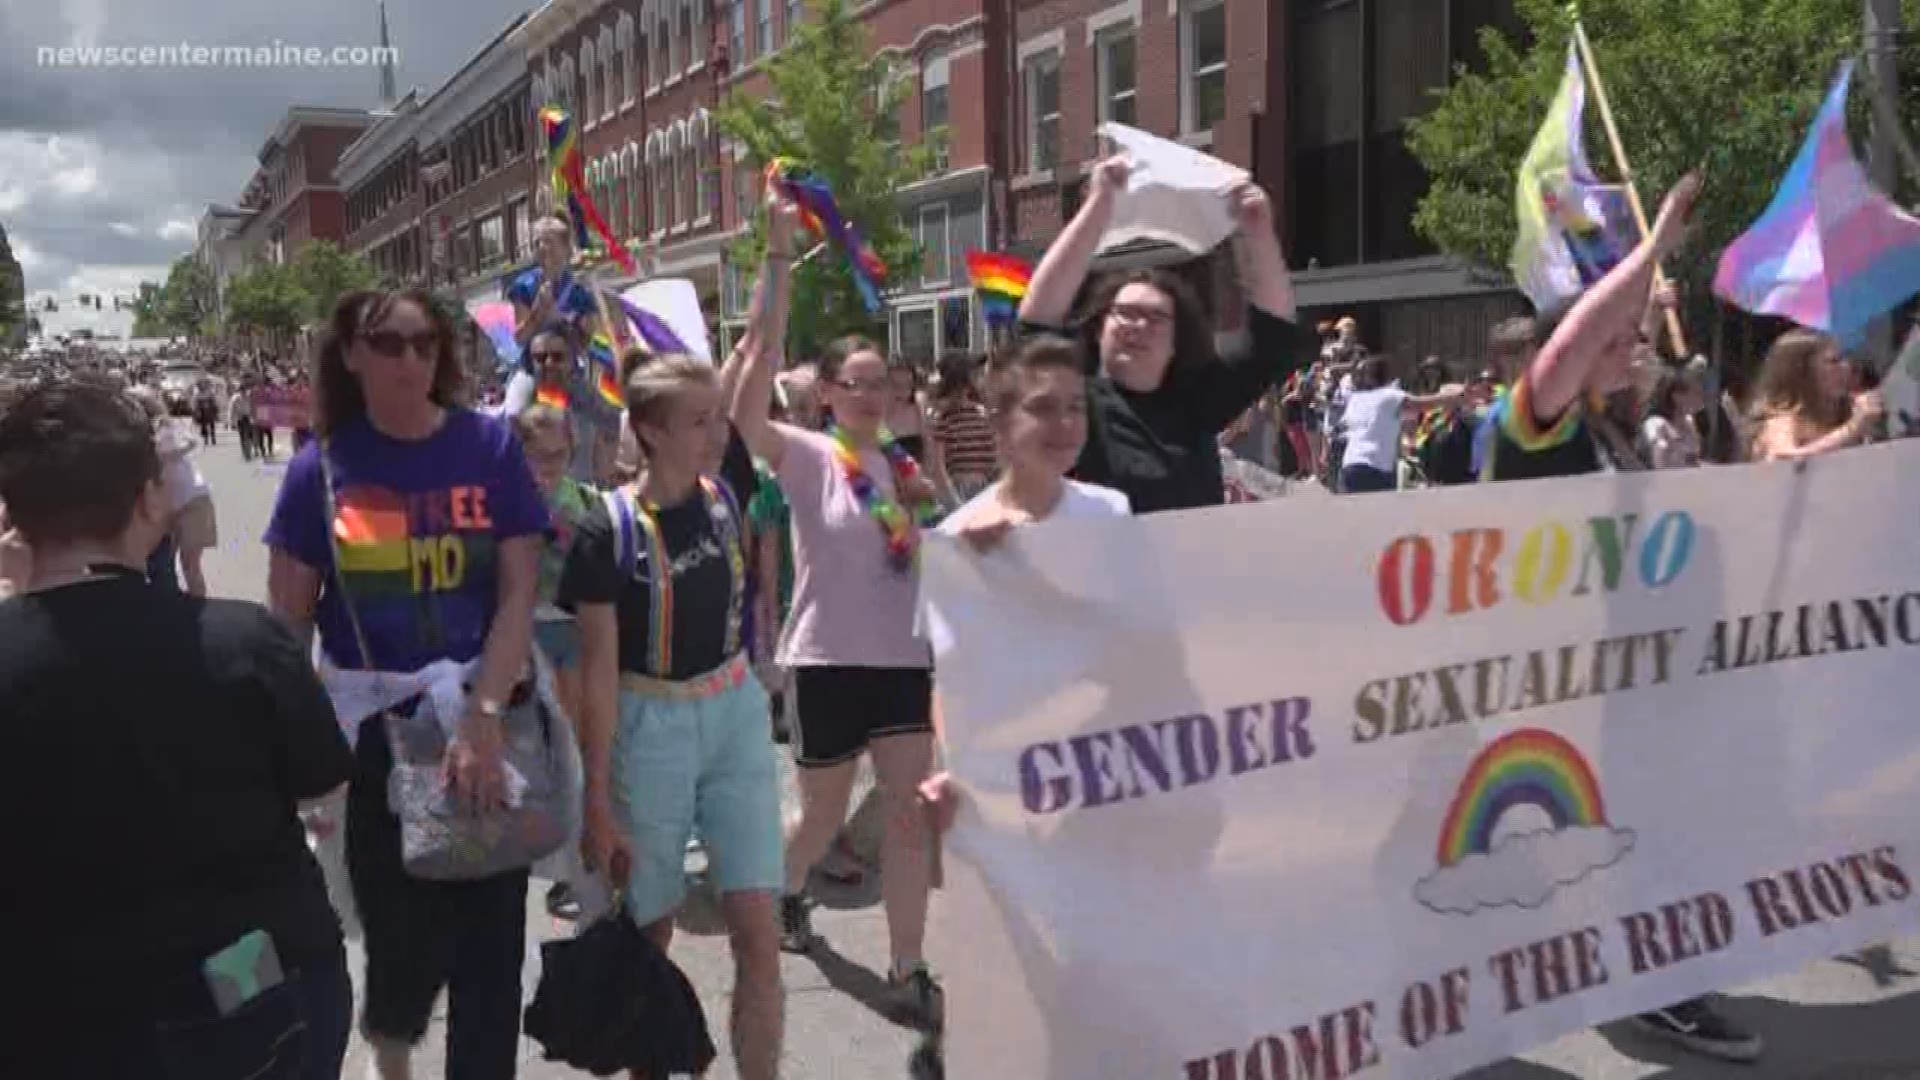 Bangor pride parade sees record turnout